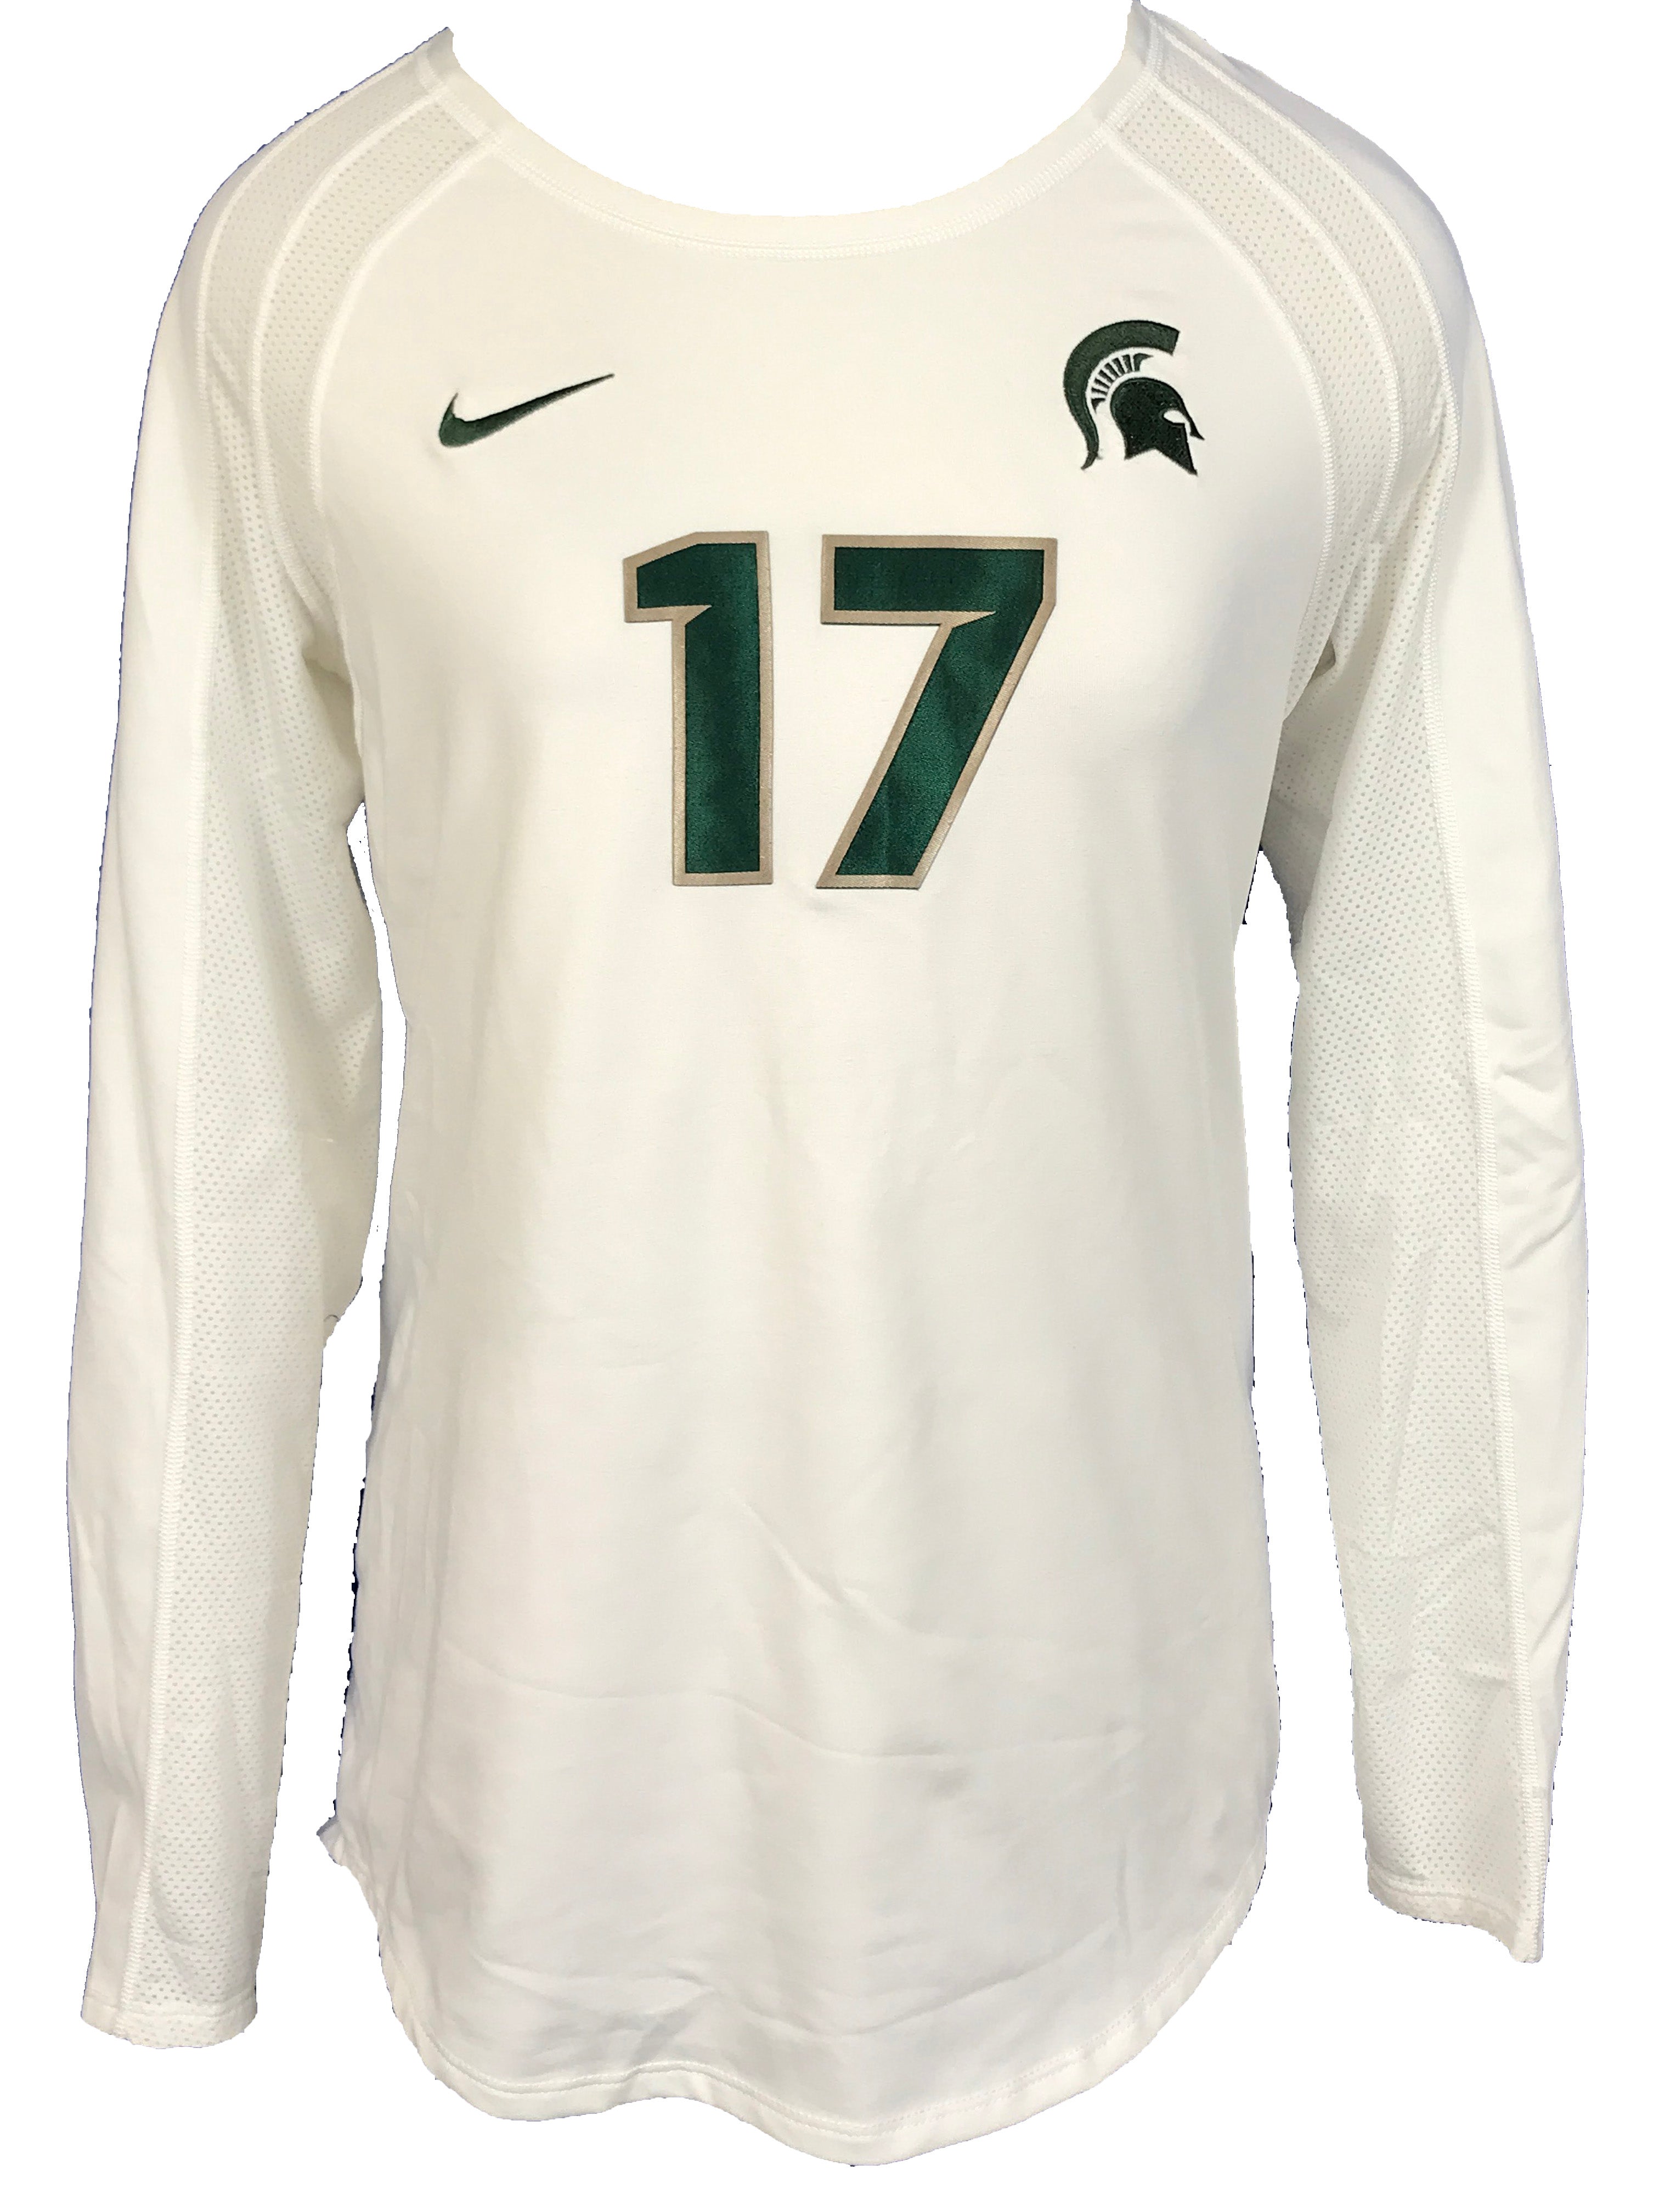 Nike White Long Sleeve MSU Volleyball Jersey #17 Women's Size XL